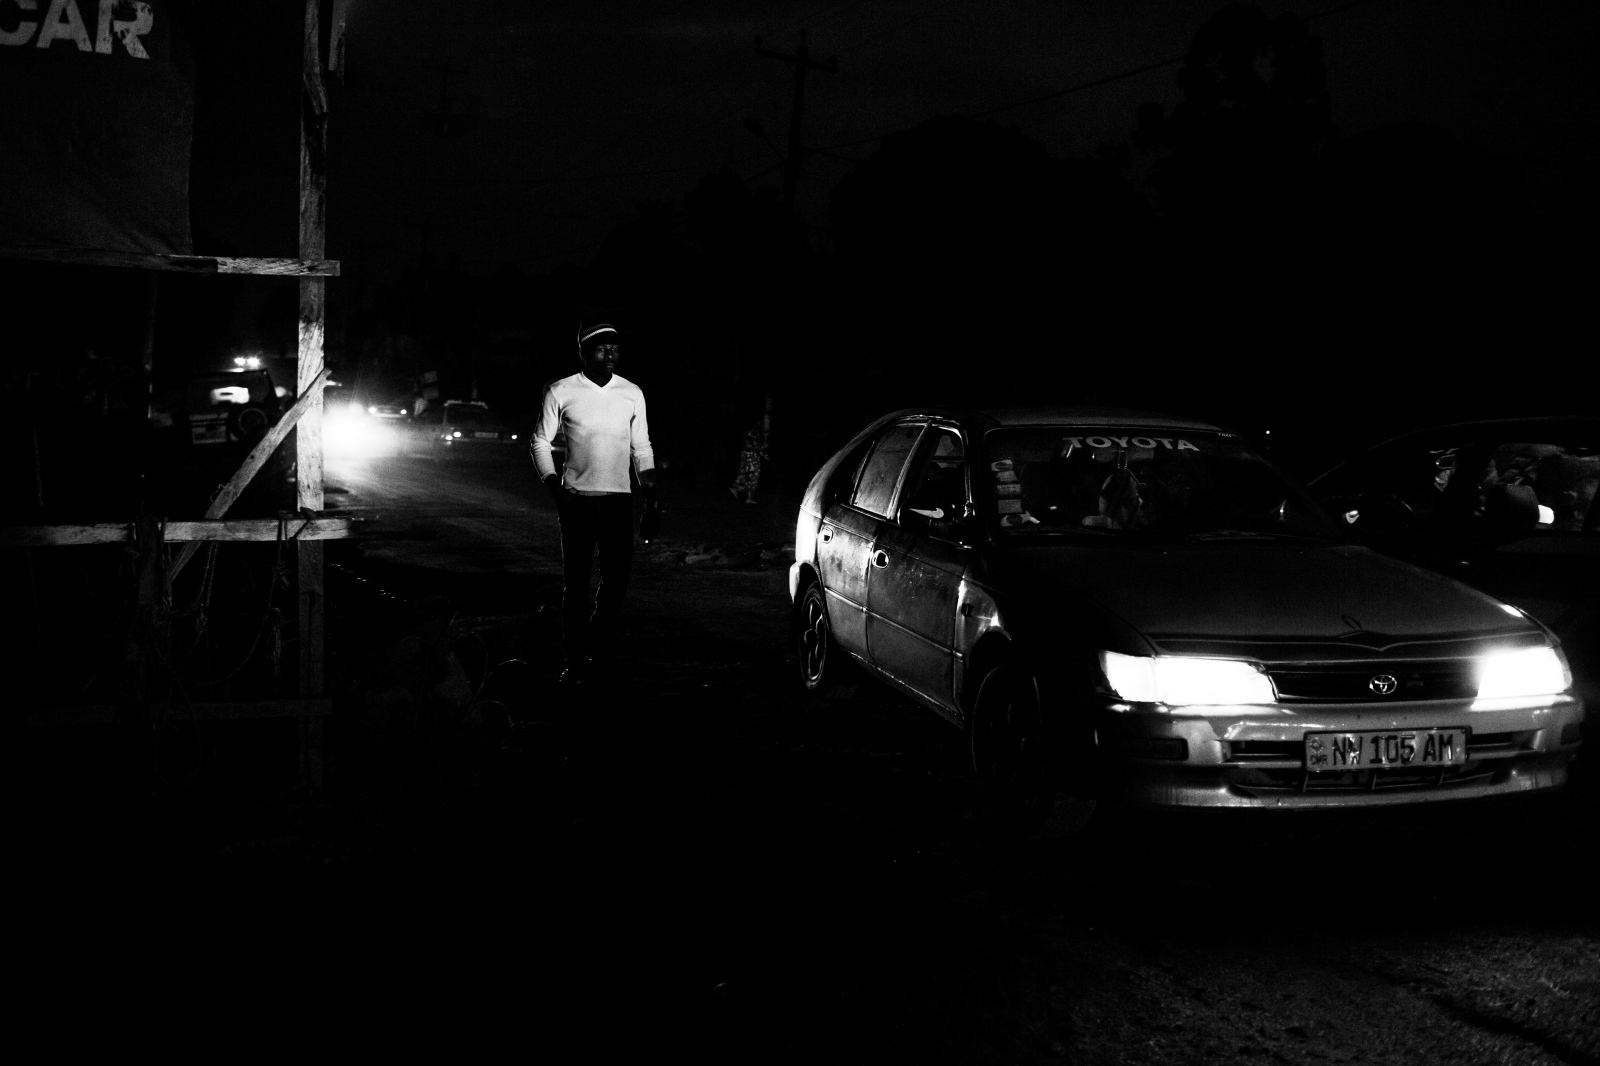 bamenda, cameroon.night falls on nkwen street - 